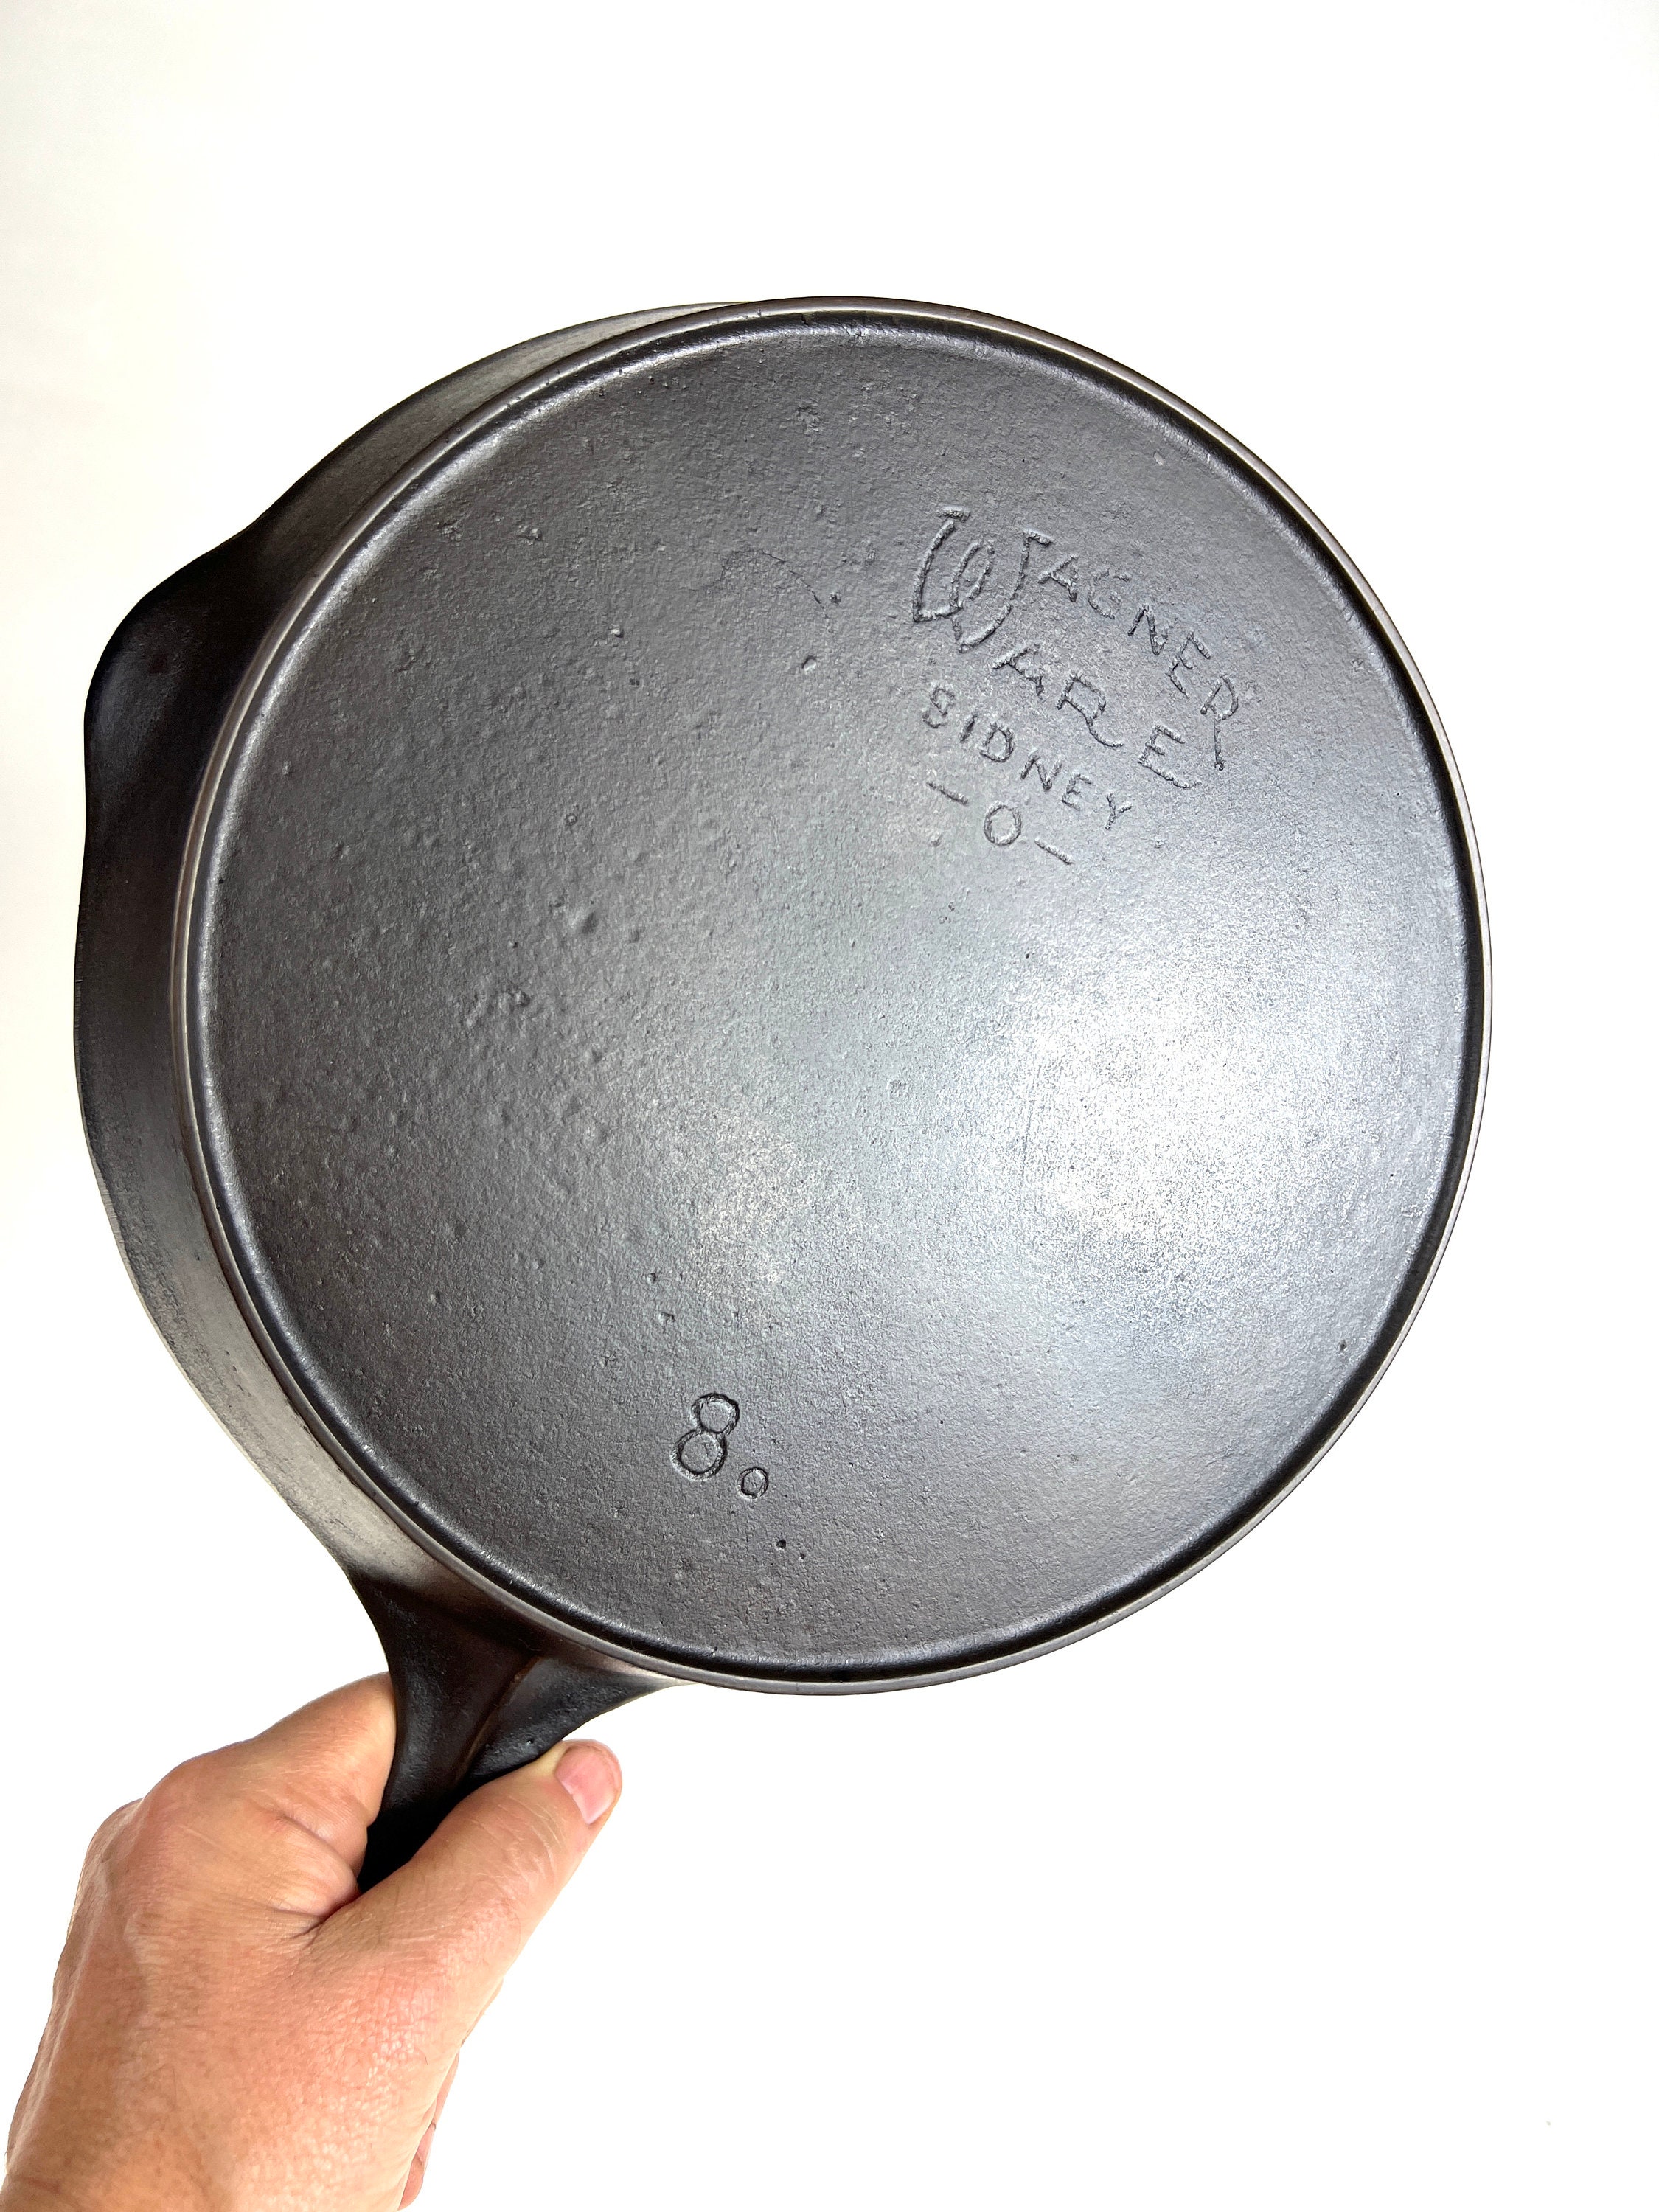 RARE Russells Patent April 9 1867 Hinged Double Broiler Pan 